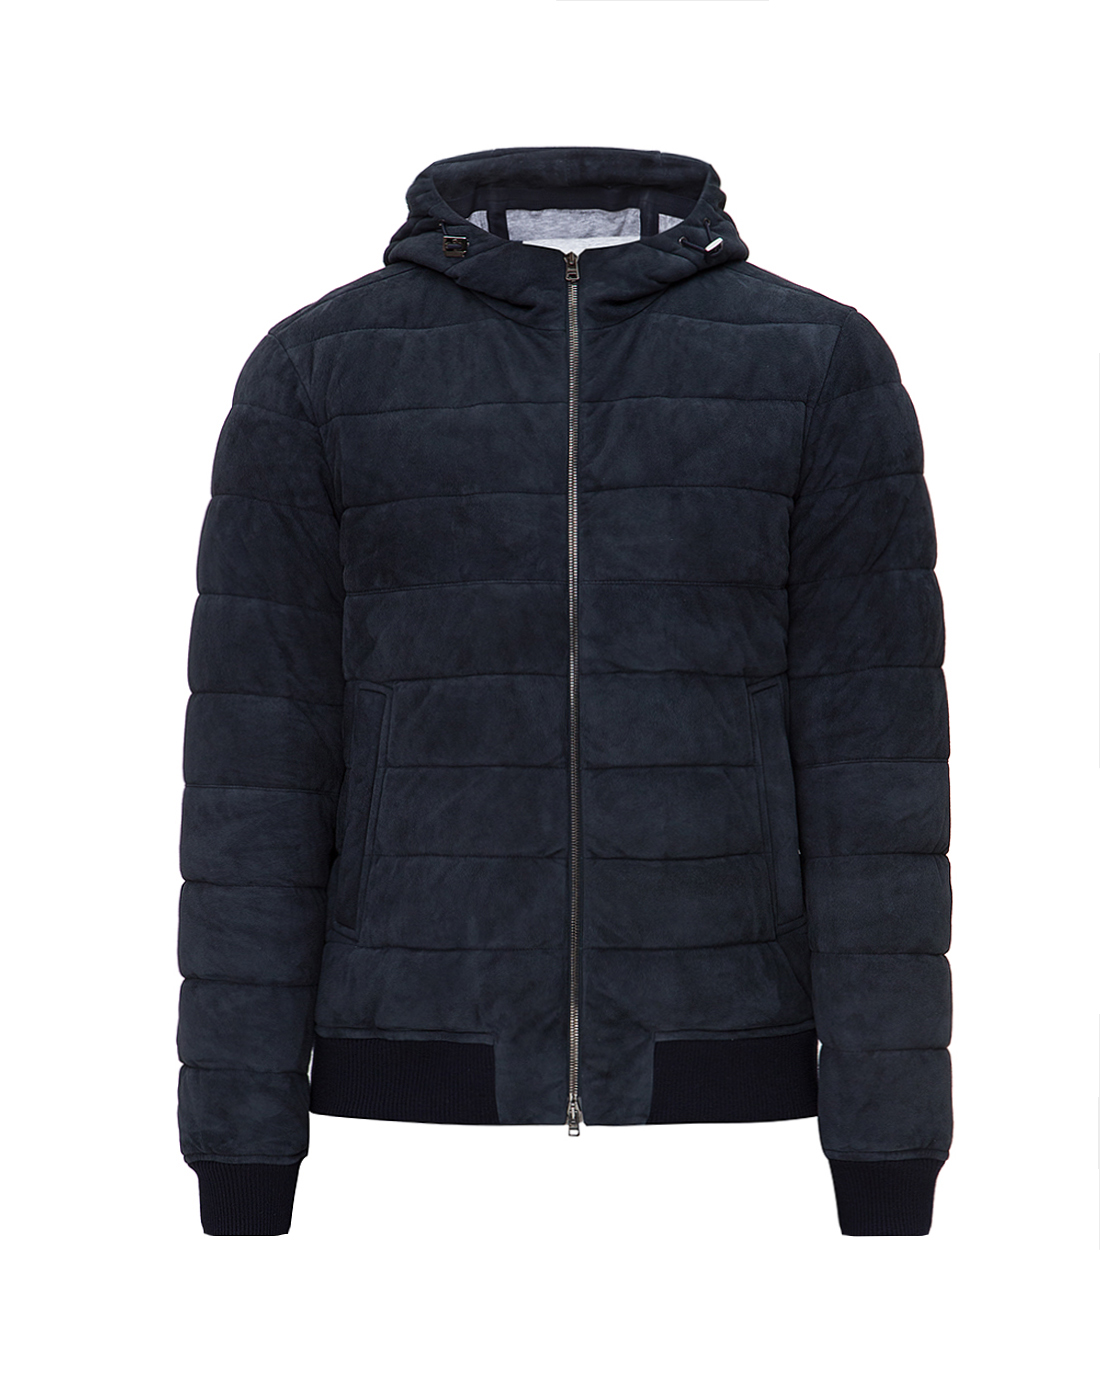 Мужская темно-синяя замшевая куртка Herno SPL002UR - 18058 - 9209-1